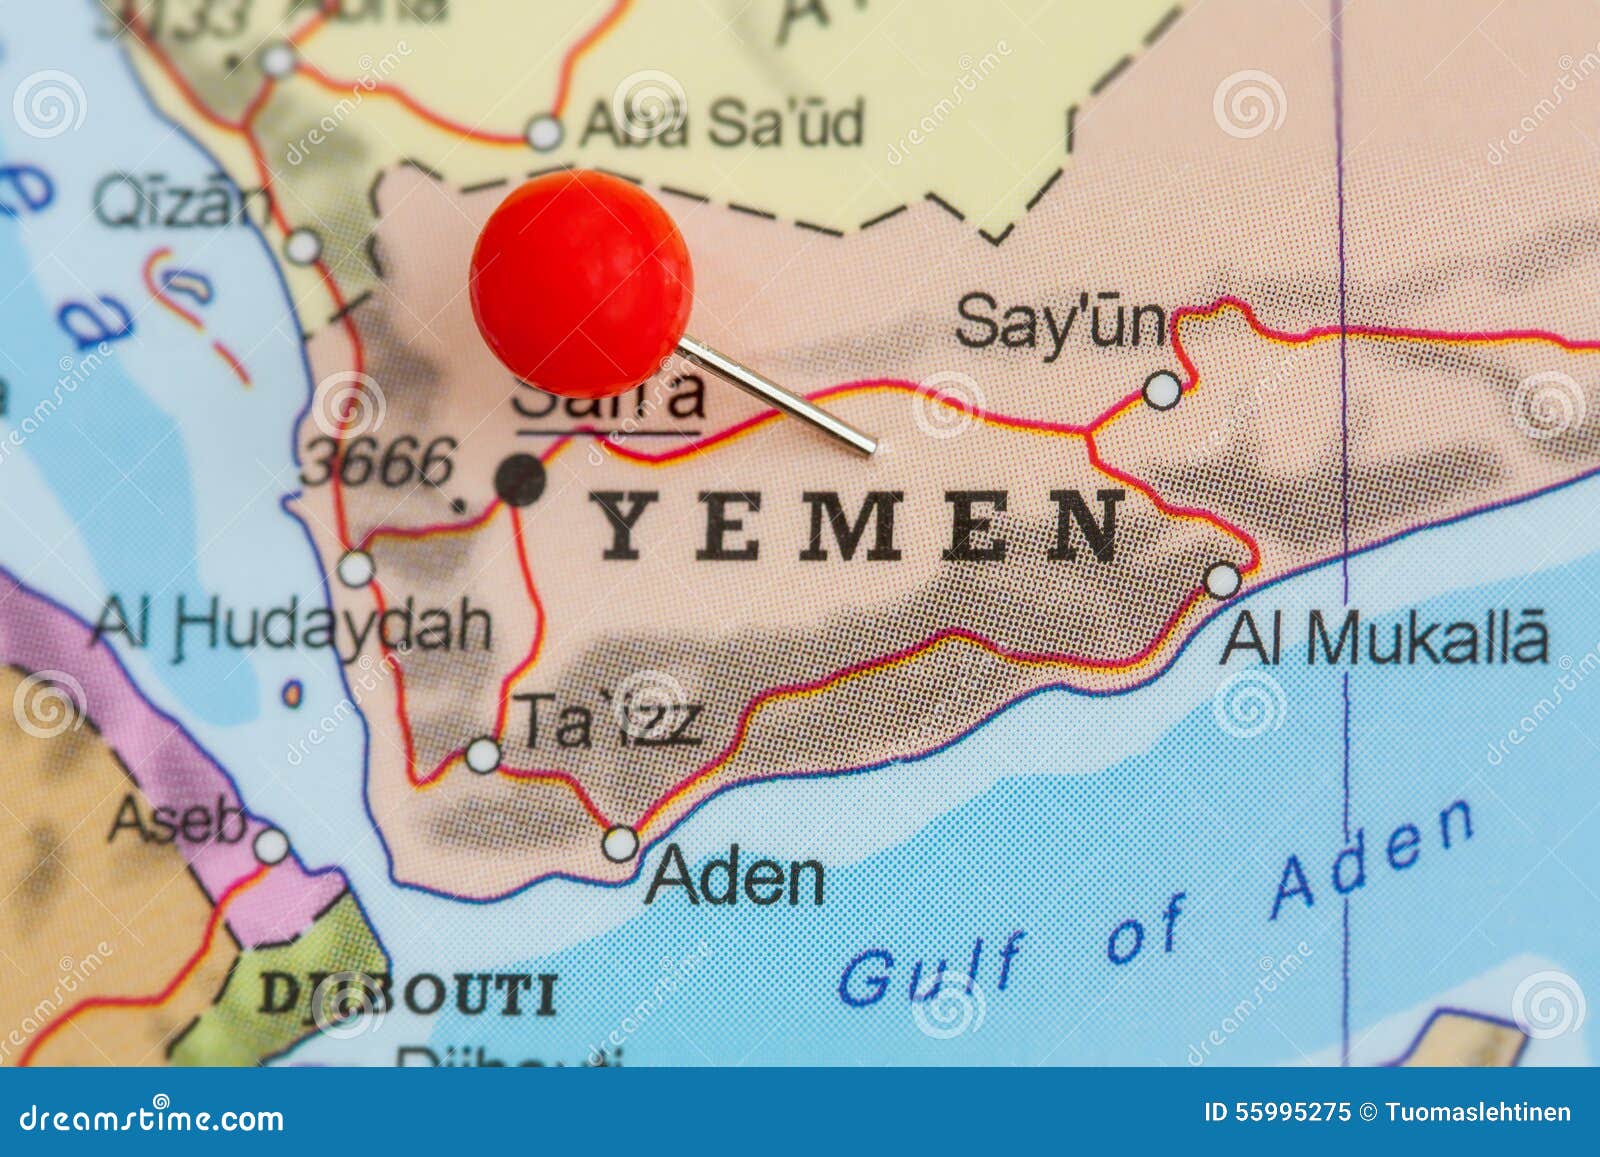 pin on a map of yemen